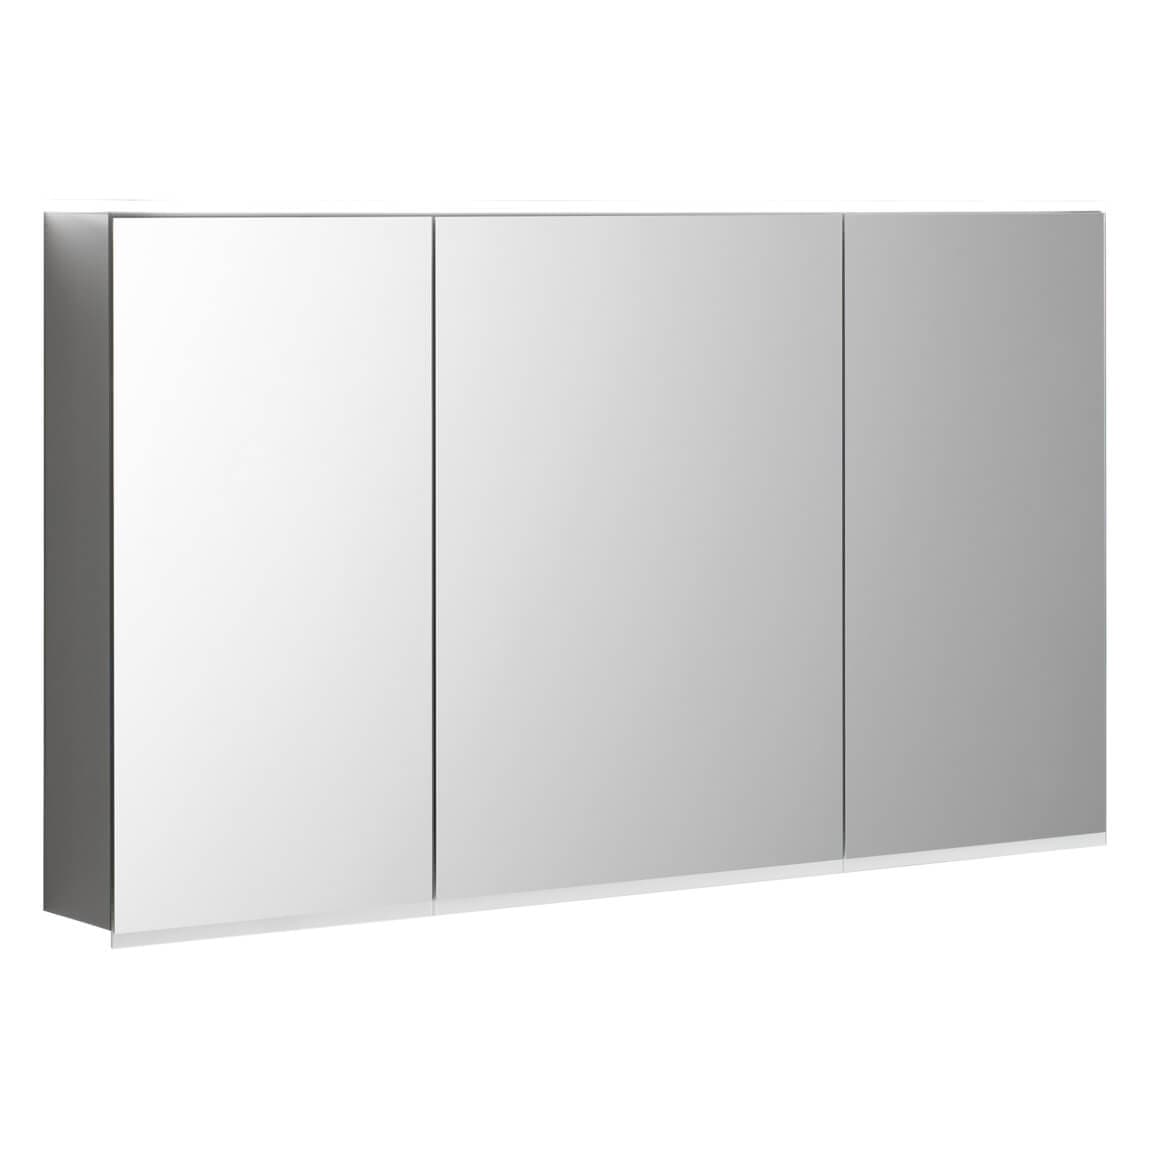 Doors Mirror Cabinet With Led Lighting, Bathroom Mirror Cabinet 900mm Wide